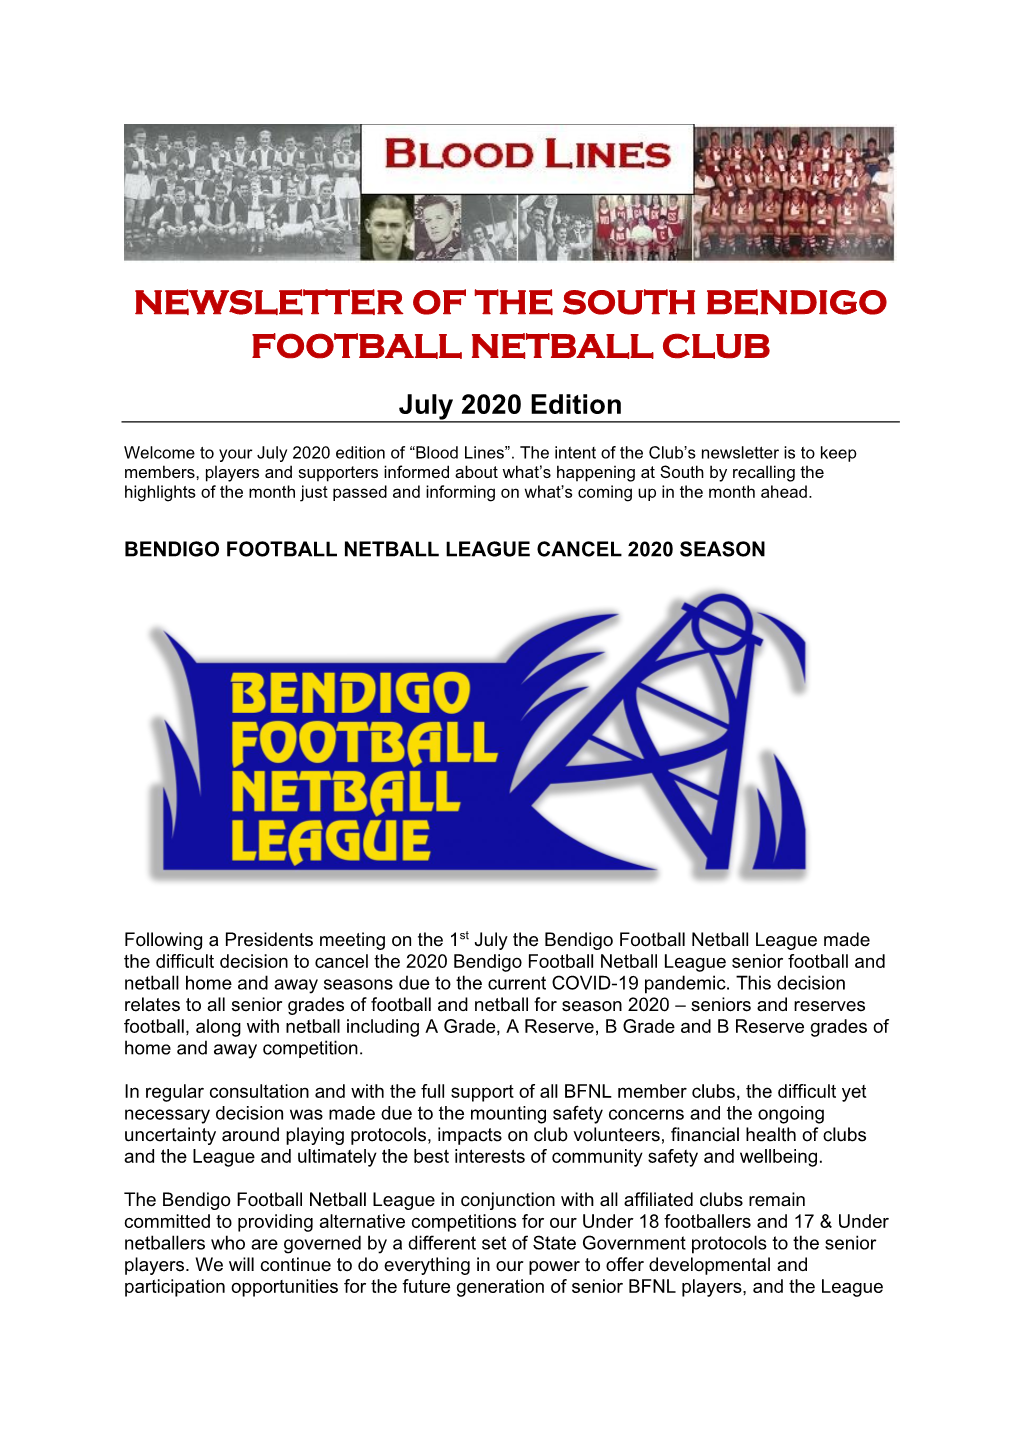 Newsletter of the South Bendigo Football Netball Club